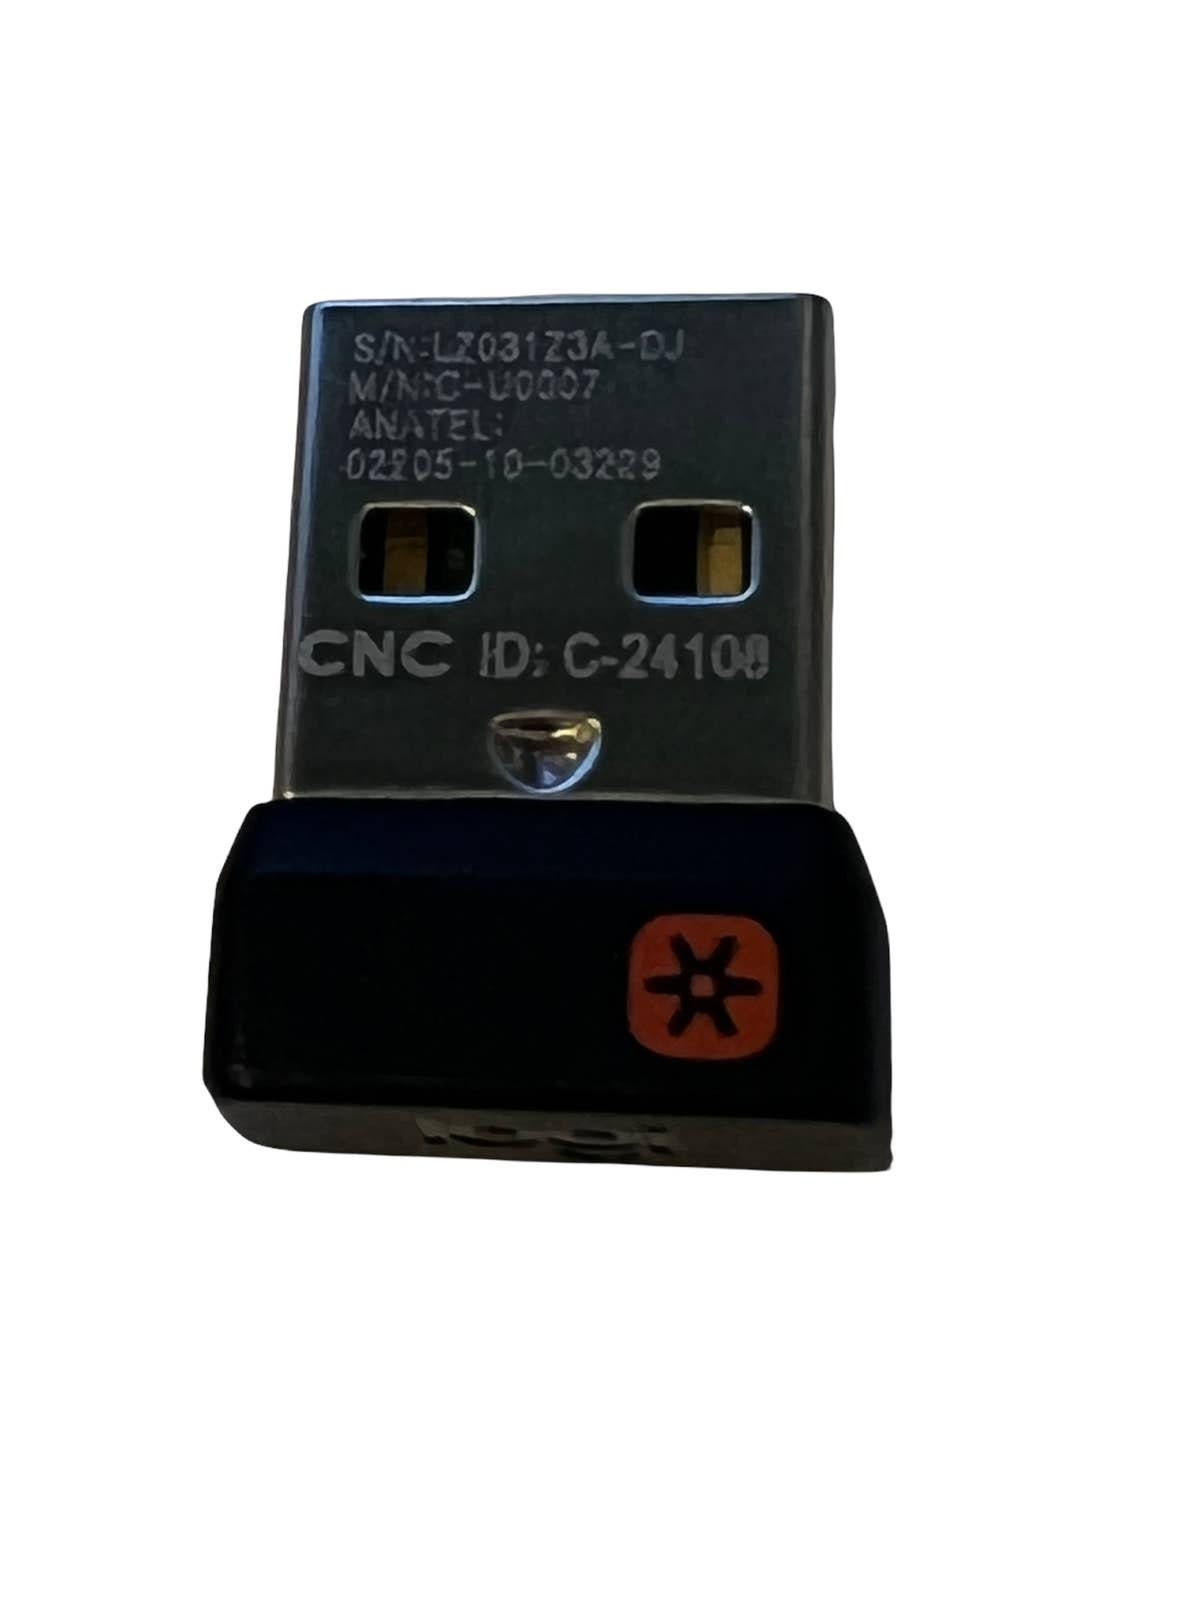 Tag et bad I forhold nedsænket Logitech Non-unifying Nano Receiver USB Nano Dongle C-24108 - Etsy